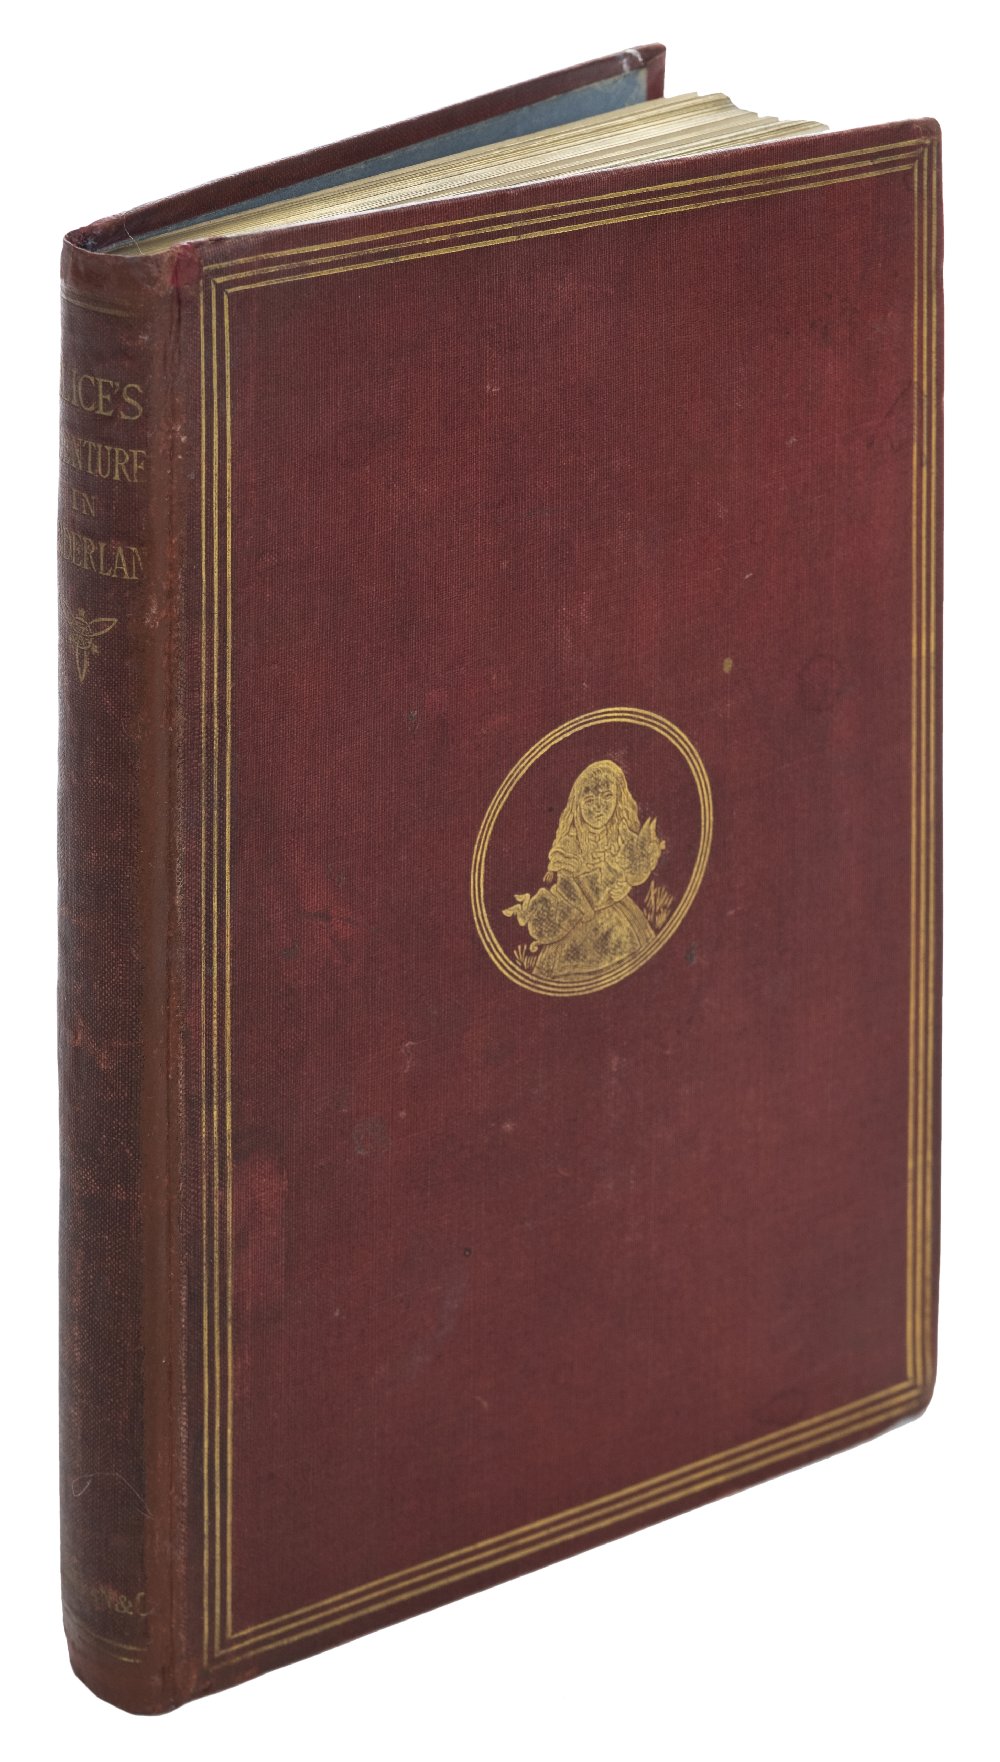 Dodgson (Charles Lutwidge, 'Lewis Carroll' ). Alice's Adventures in Wonderland, 1st published